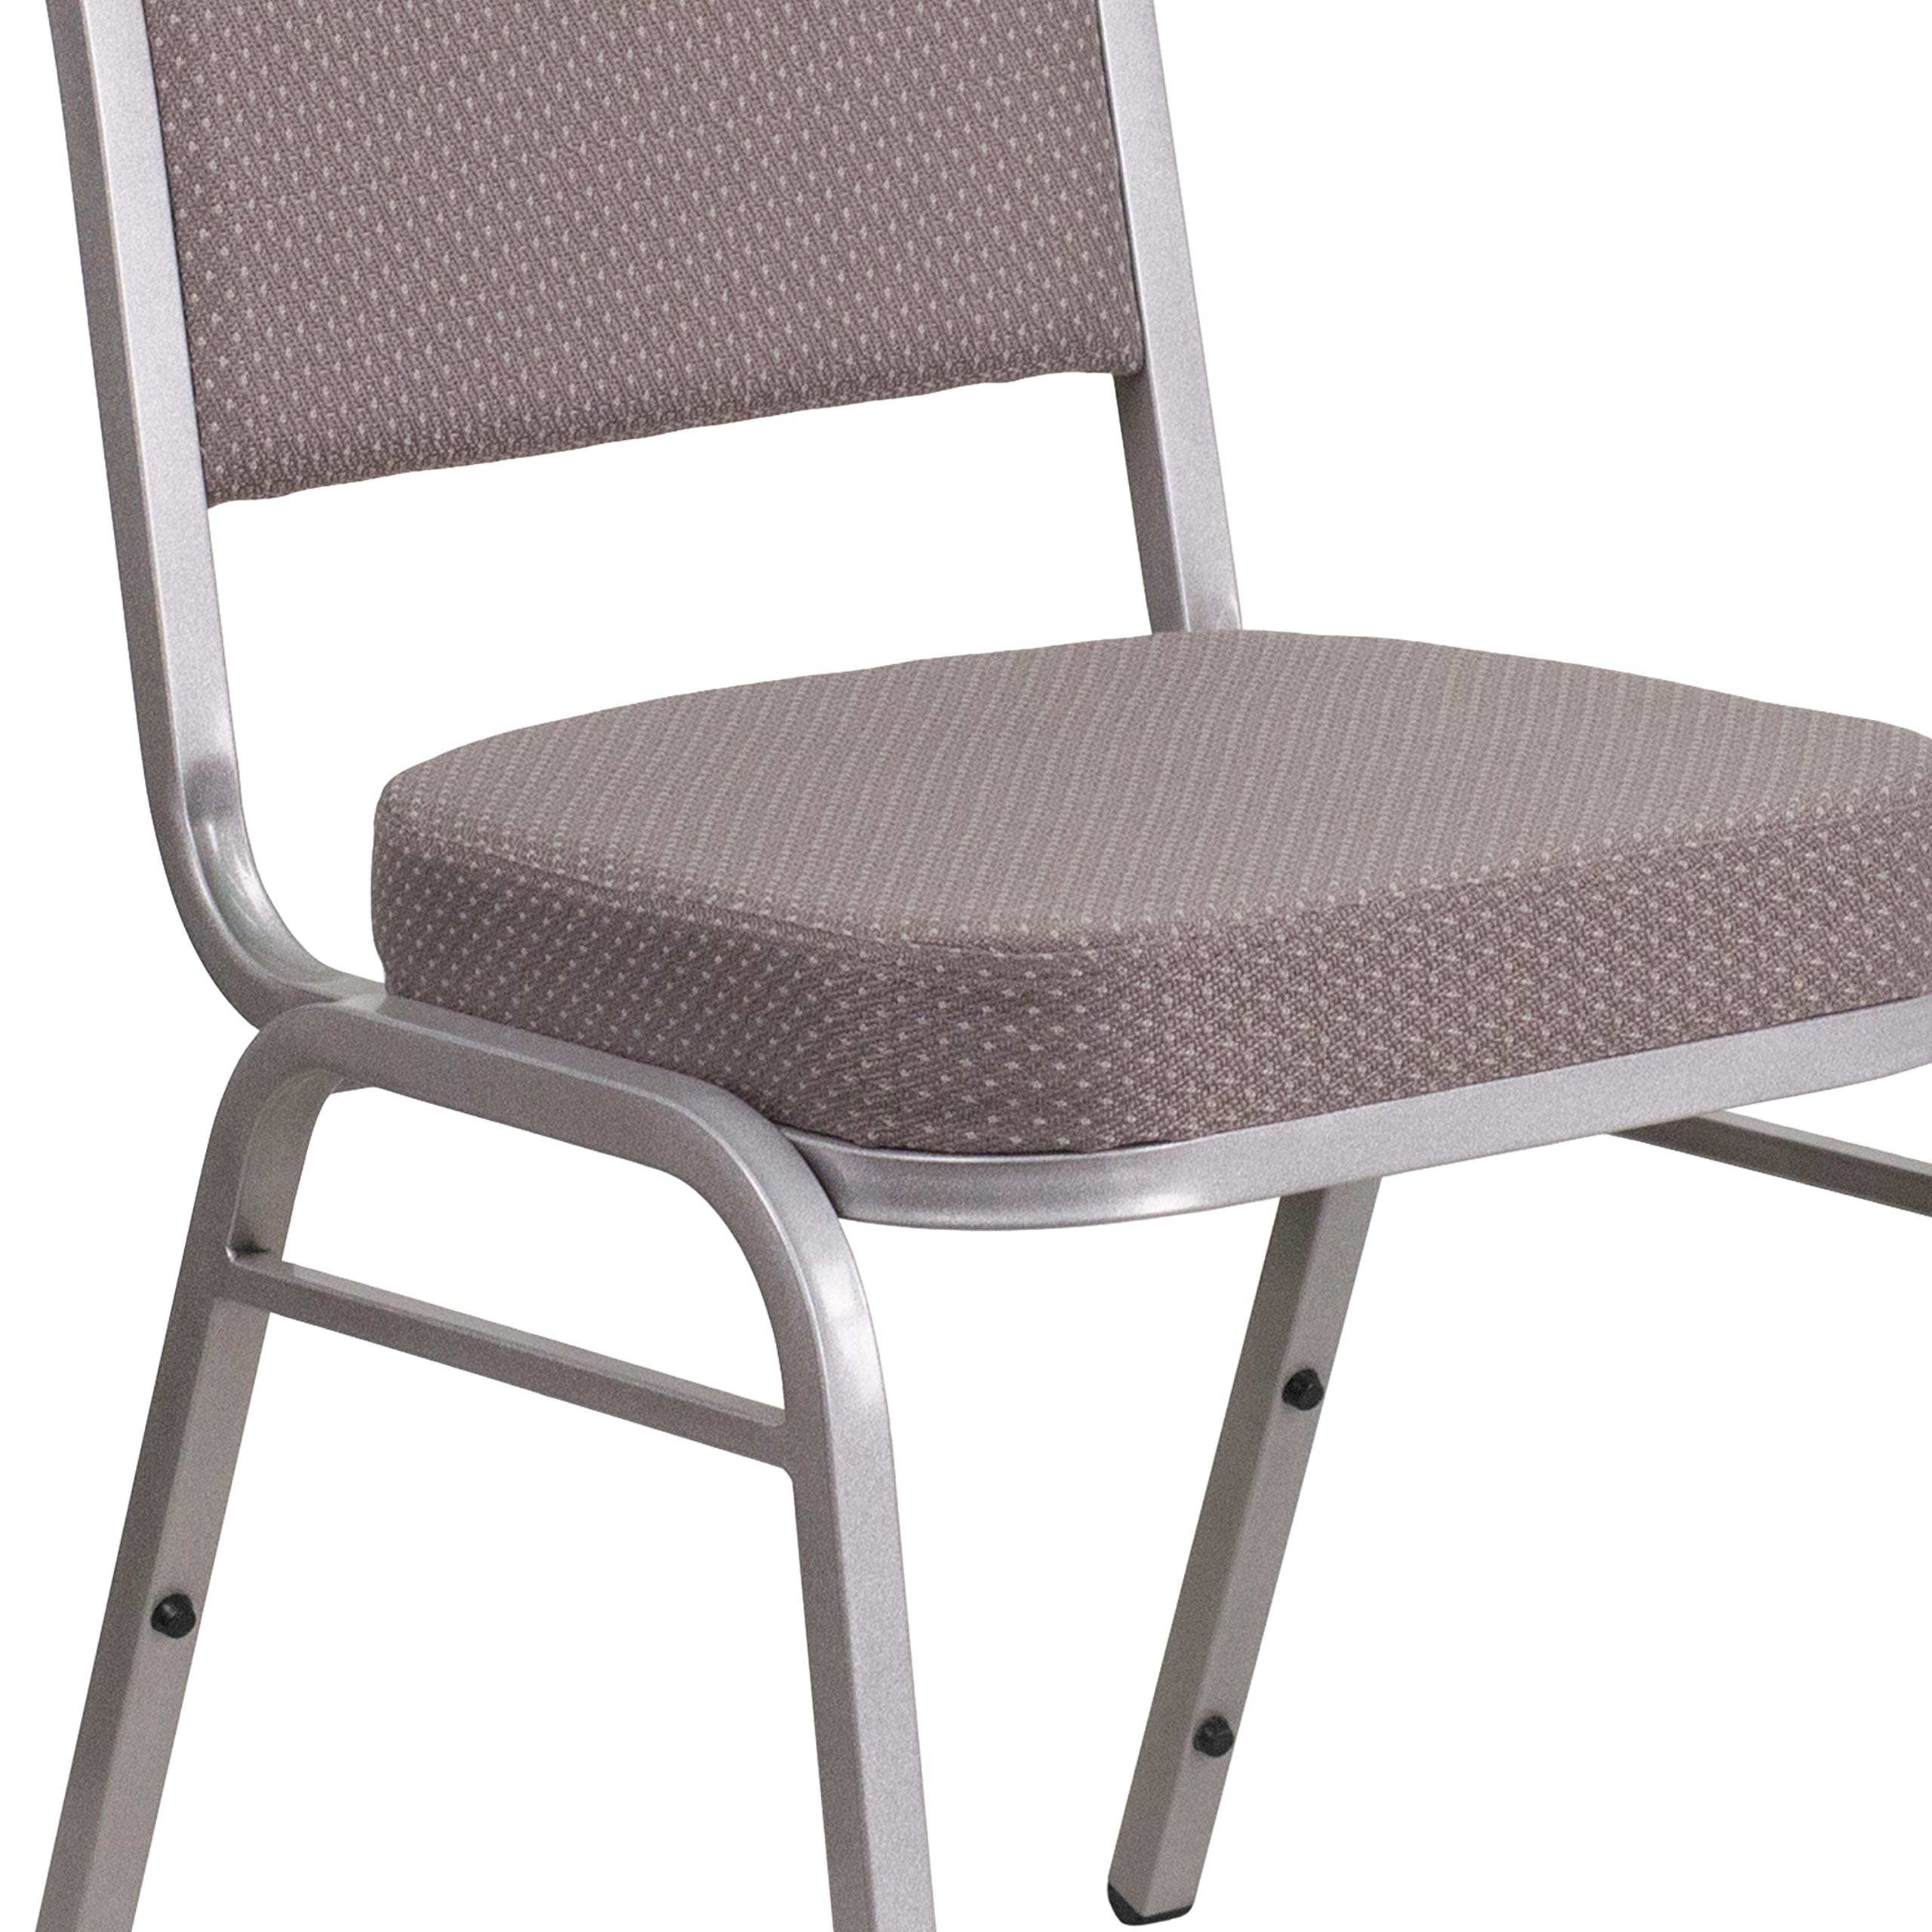 BizChair Crown Back Stacking Banquet Chair, Gray Dot Fabric/Silver Frame